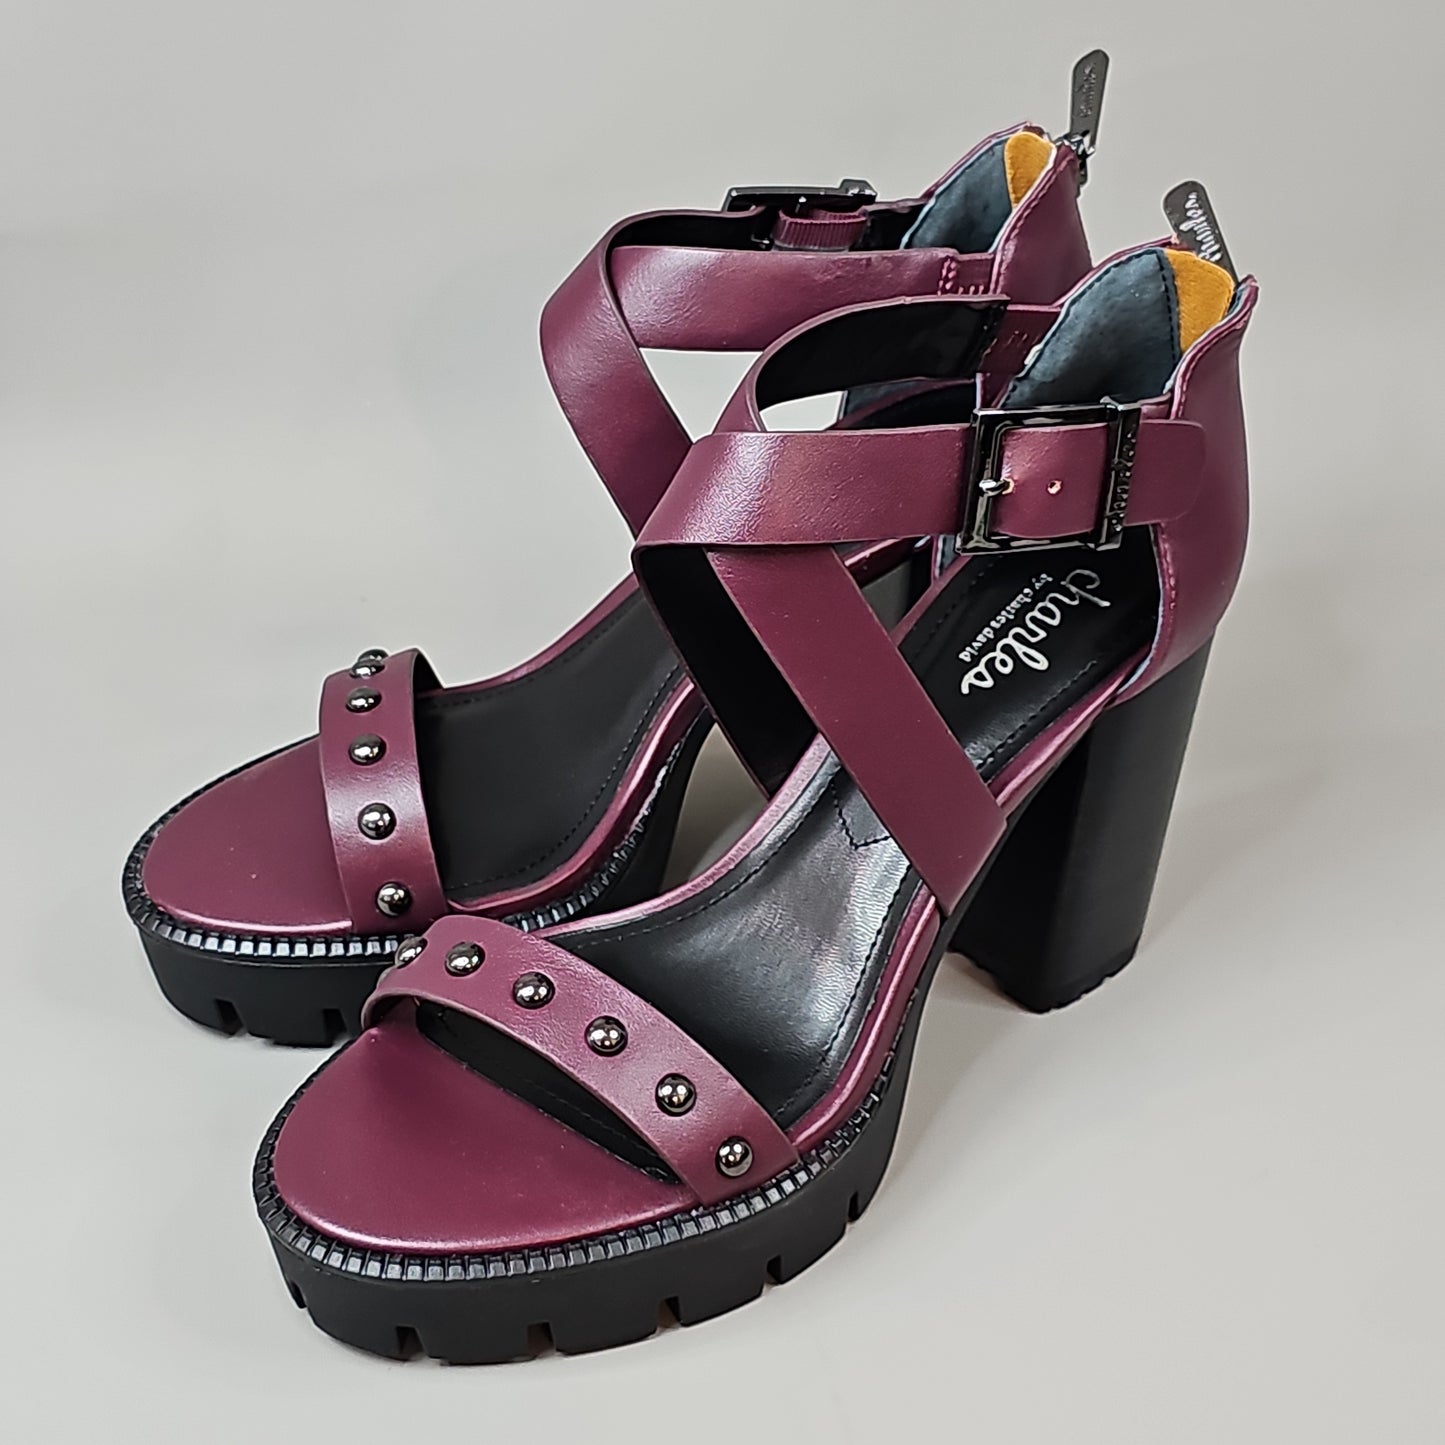 CHARLES BY CHARLES DAVID Women's Vanden Studded Sandal Shoe Sz 8M Burgundy (New)